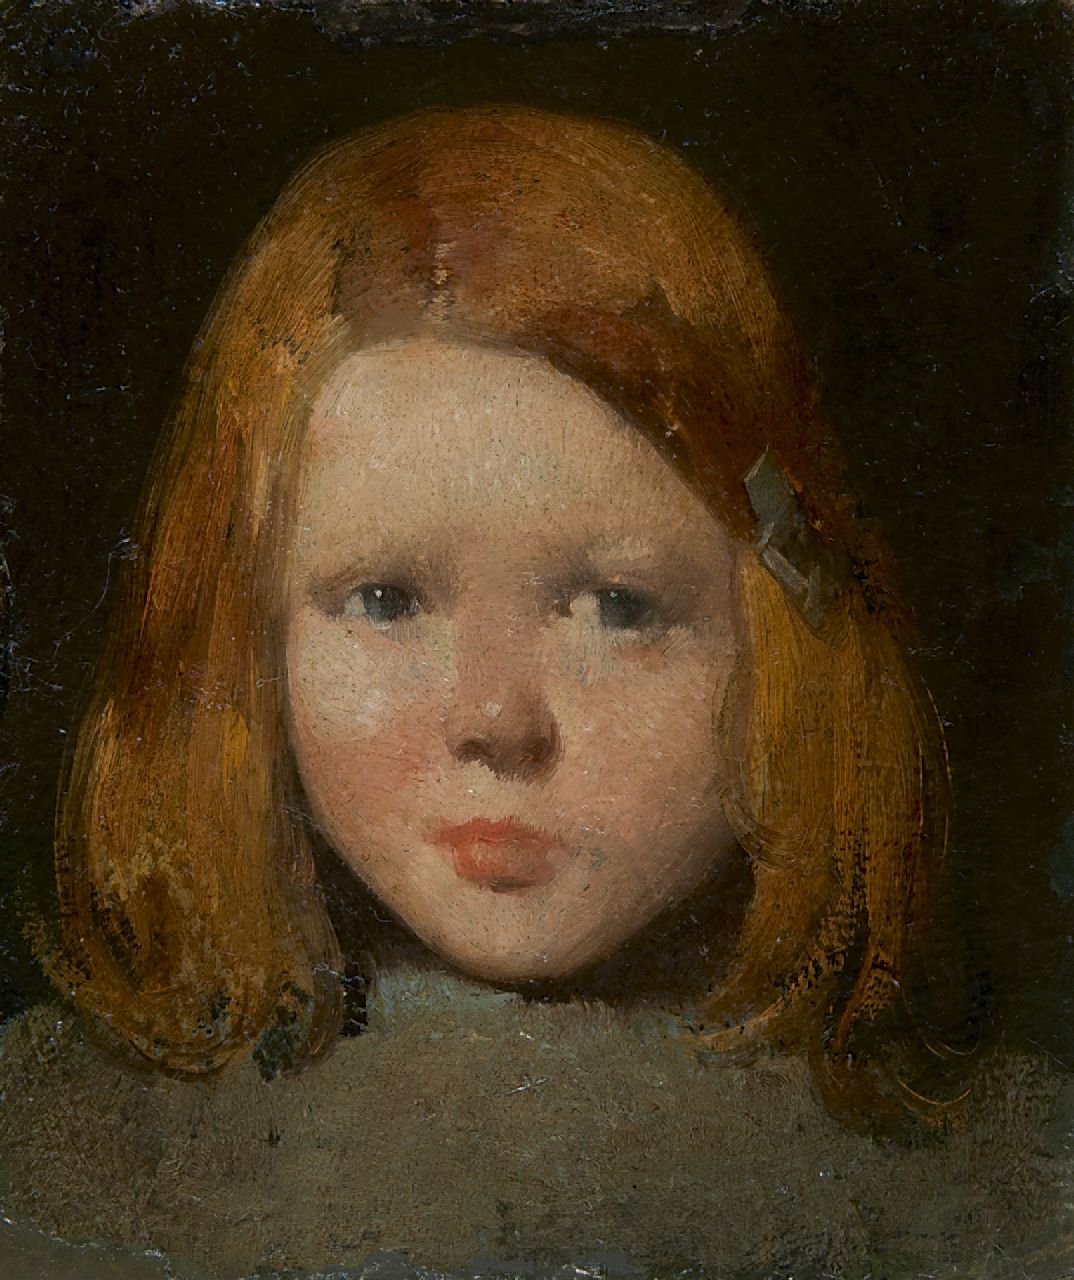 Berg W.H. van den | 'Willem' Hendrik van den Berg, A child's portrait, oil on paper laid down on board 13.6 x 11.7 cm